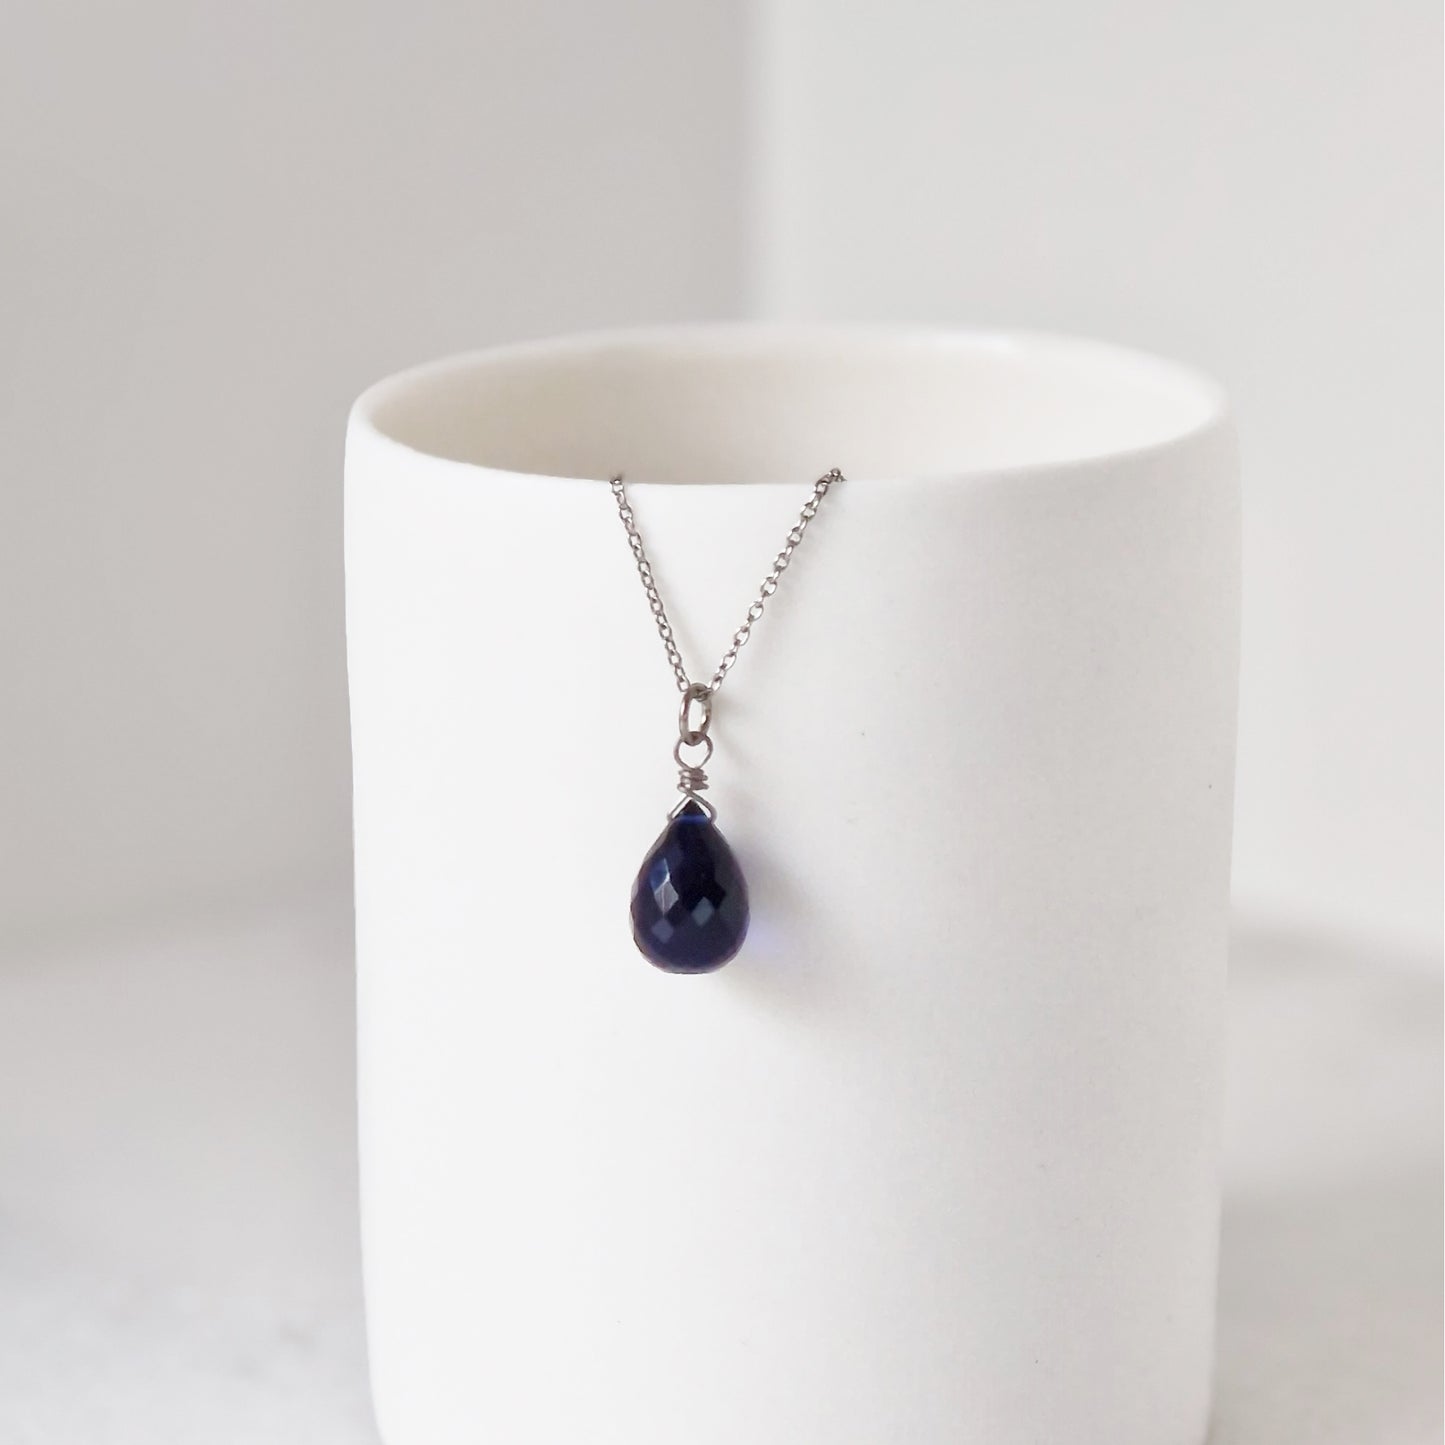 Titanium Necklace with Kyanite Blue Quartz Teardrop